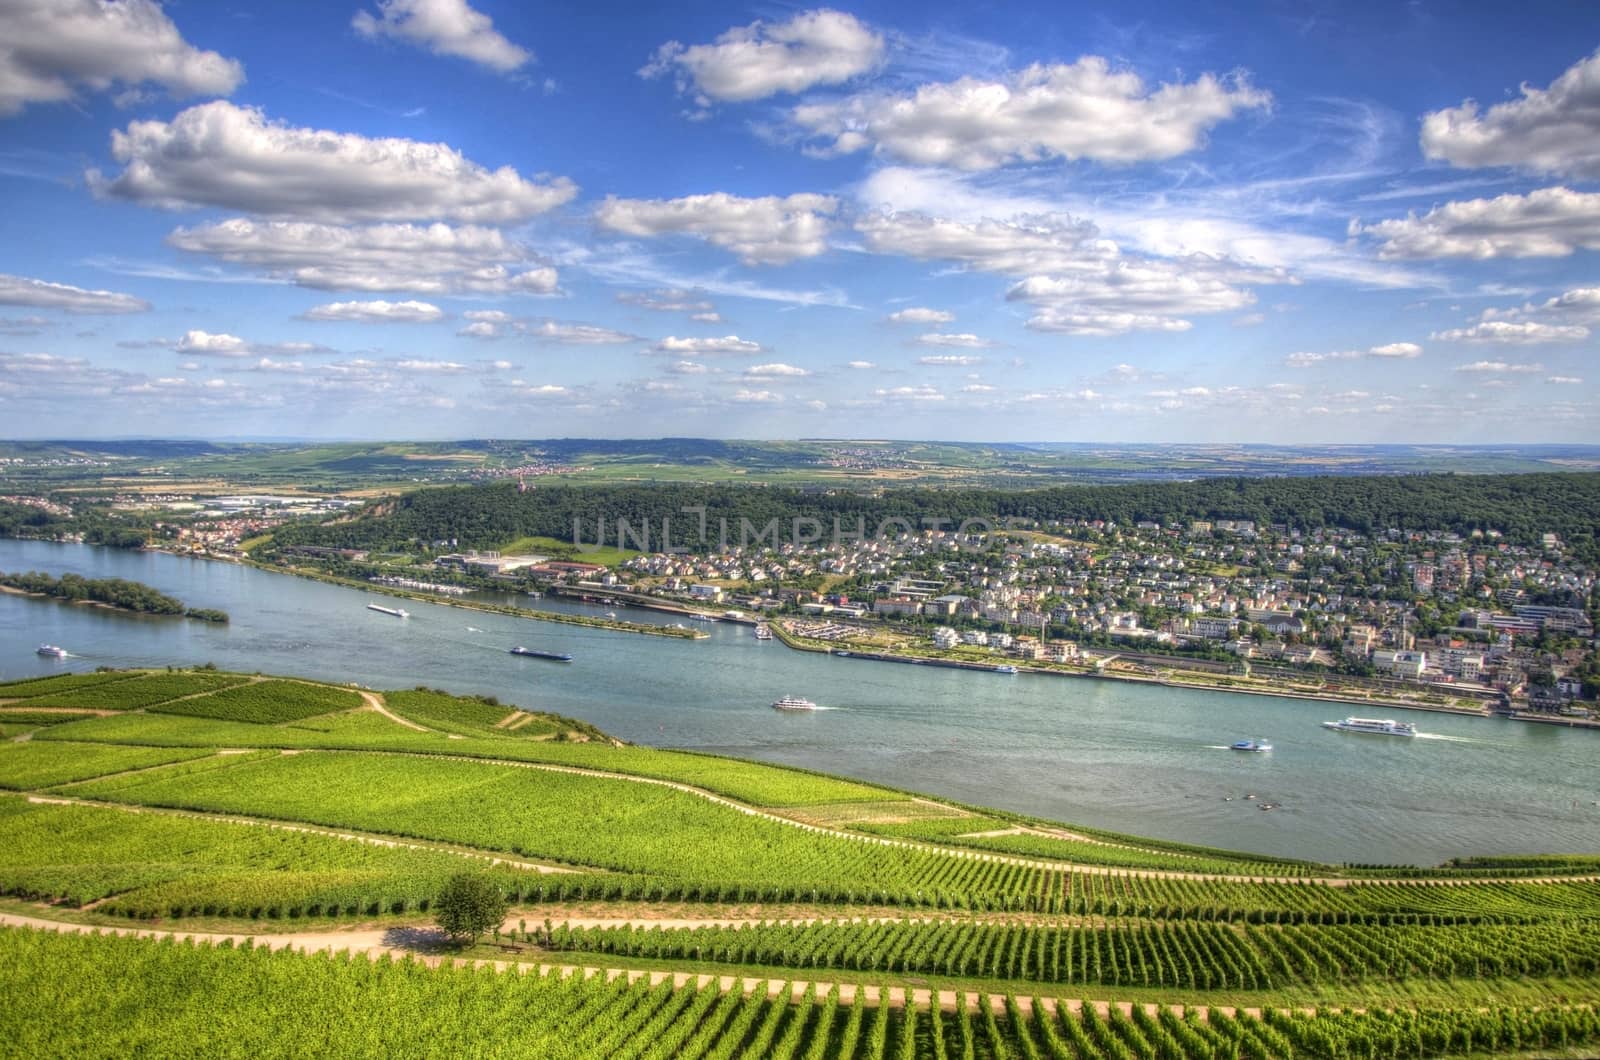 Vineyards on the bank of Rhein river, Ruedesheim, Rhein-main-pfa by Eagle2308